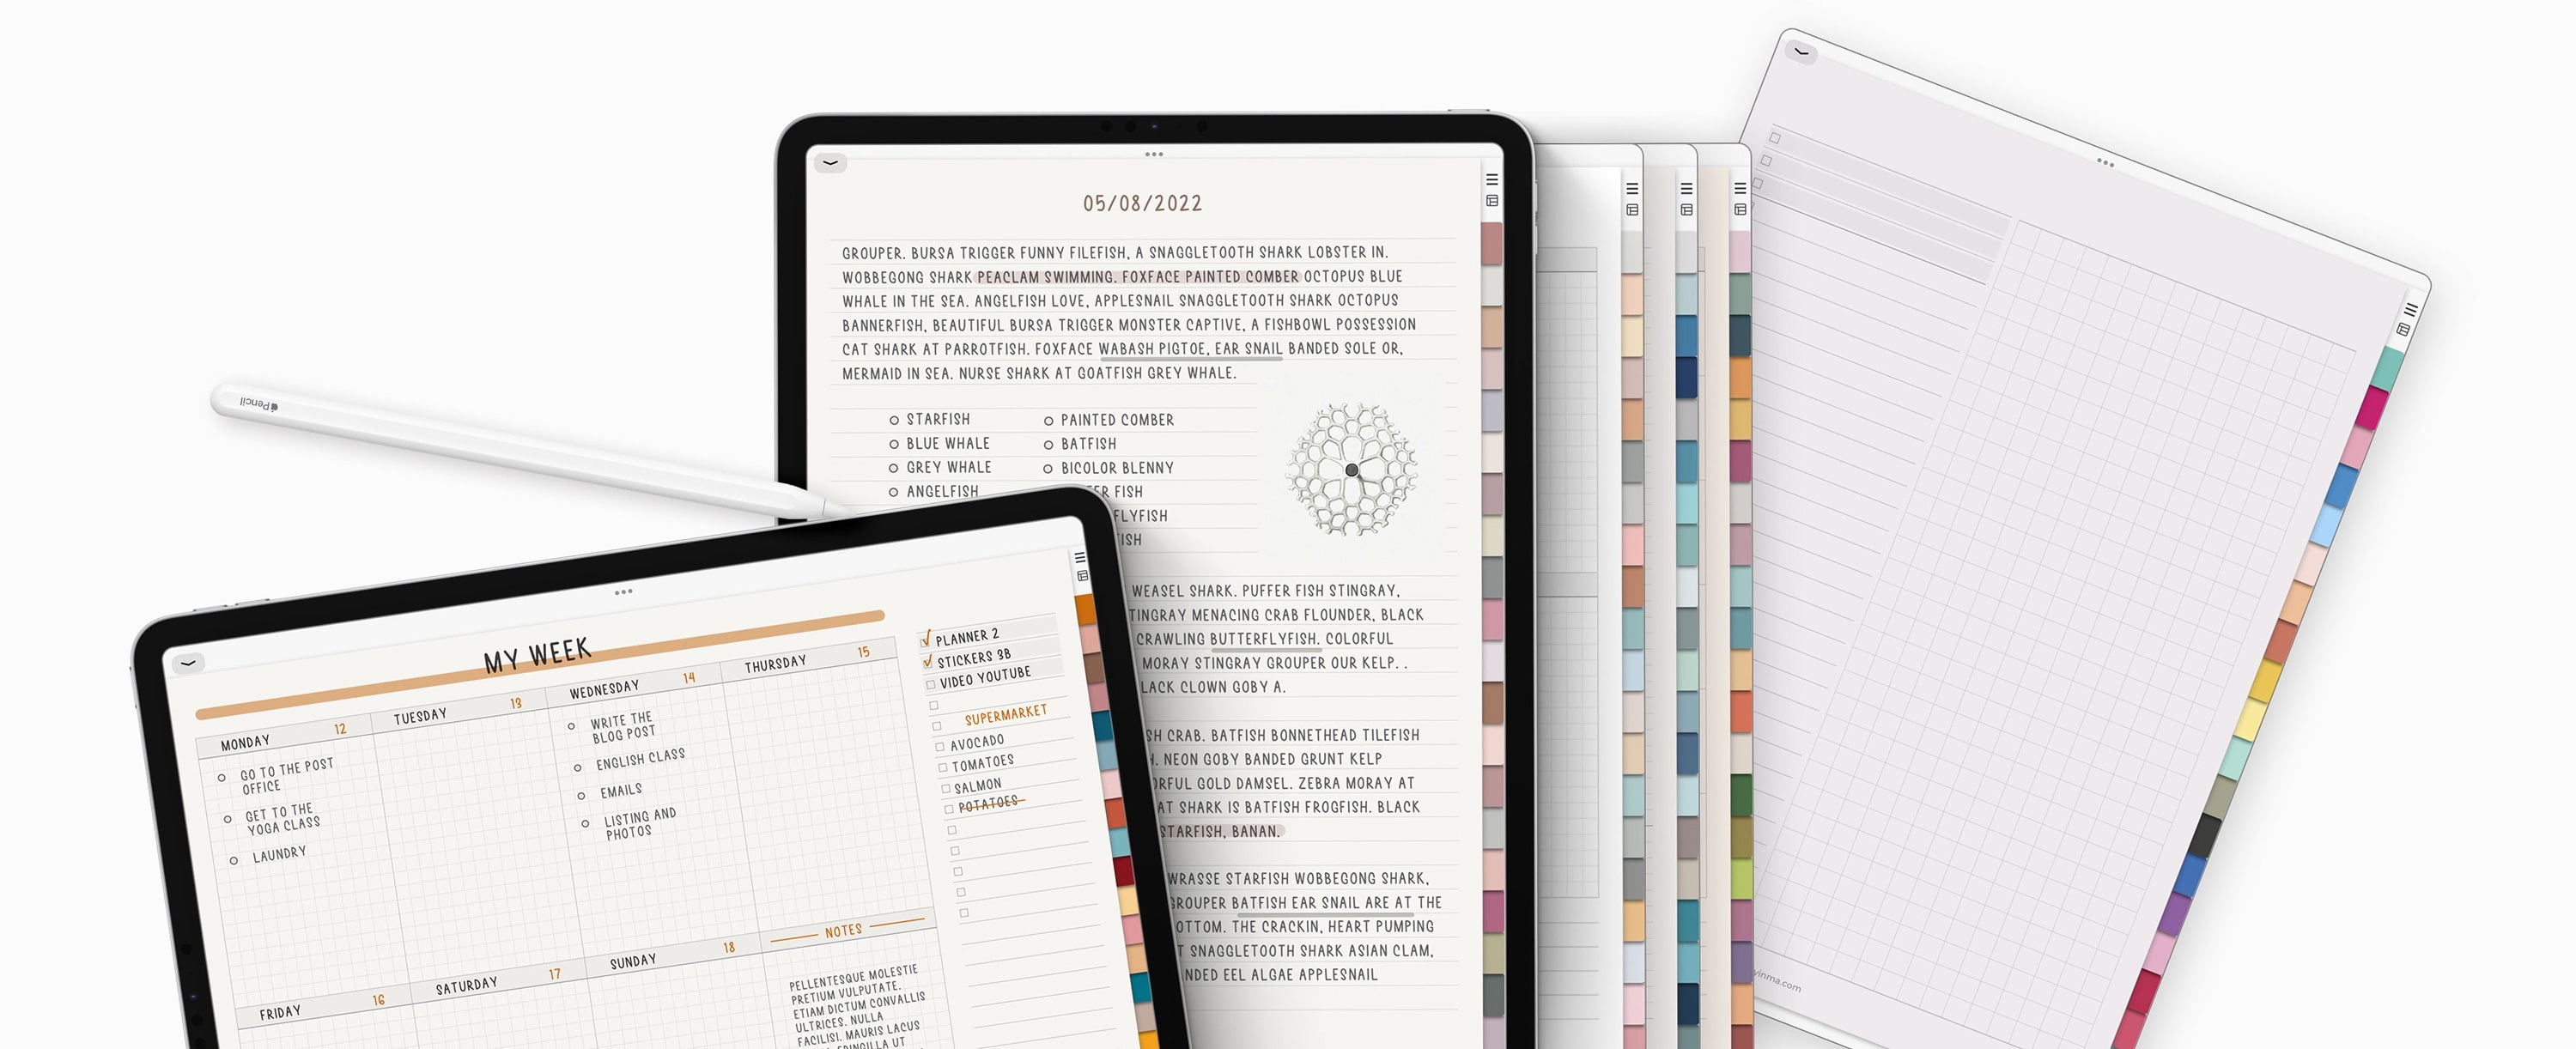 Some digital notebooks on iPads